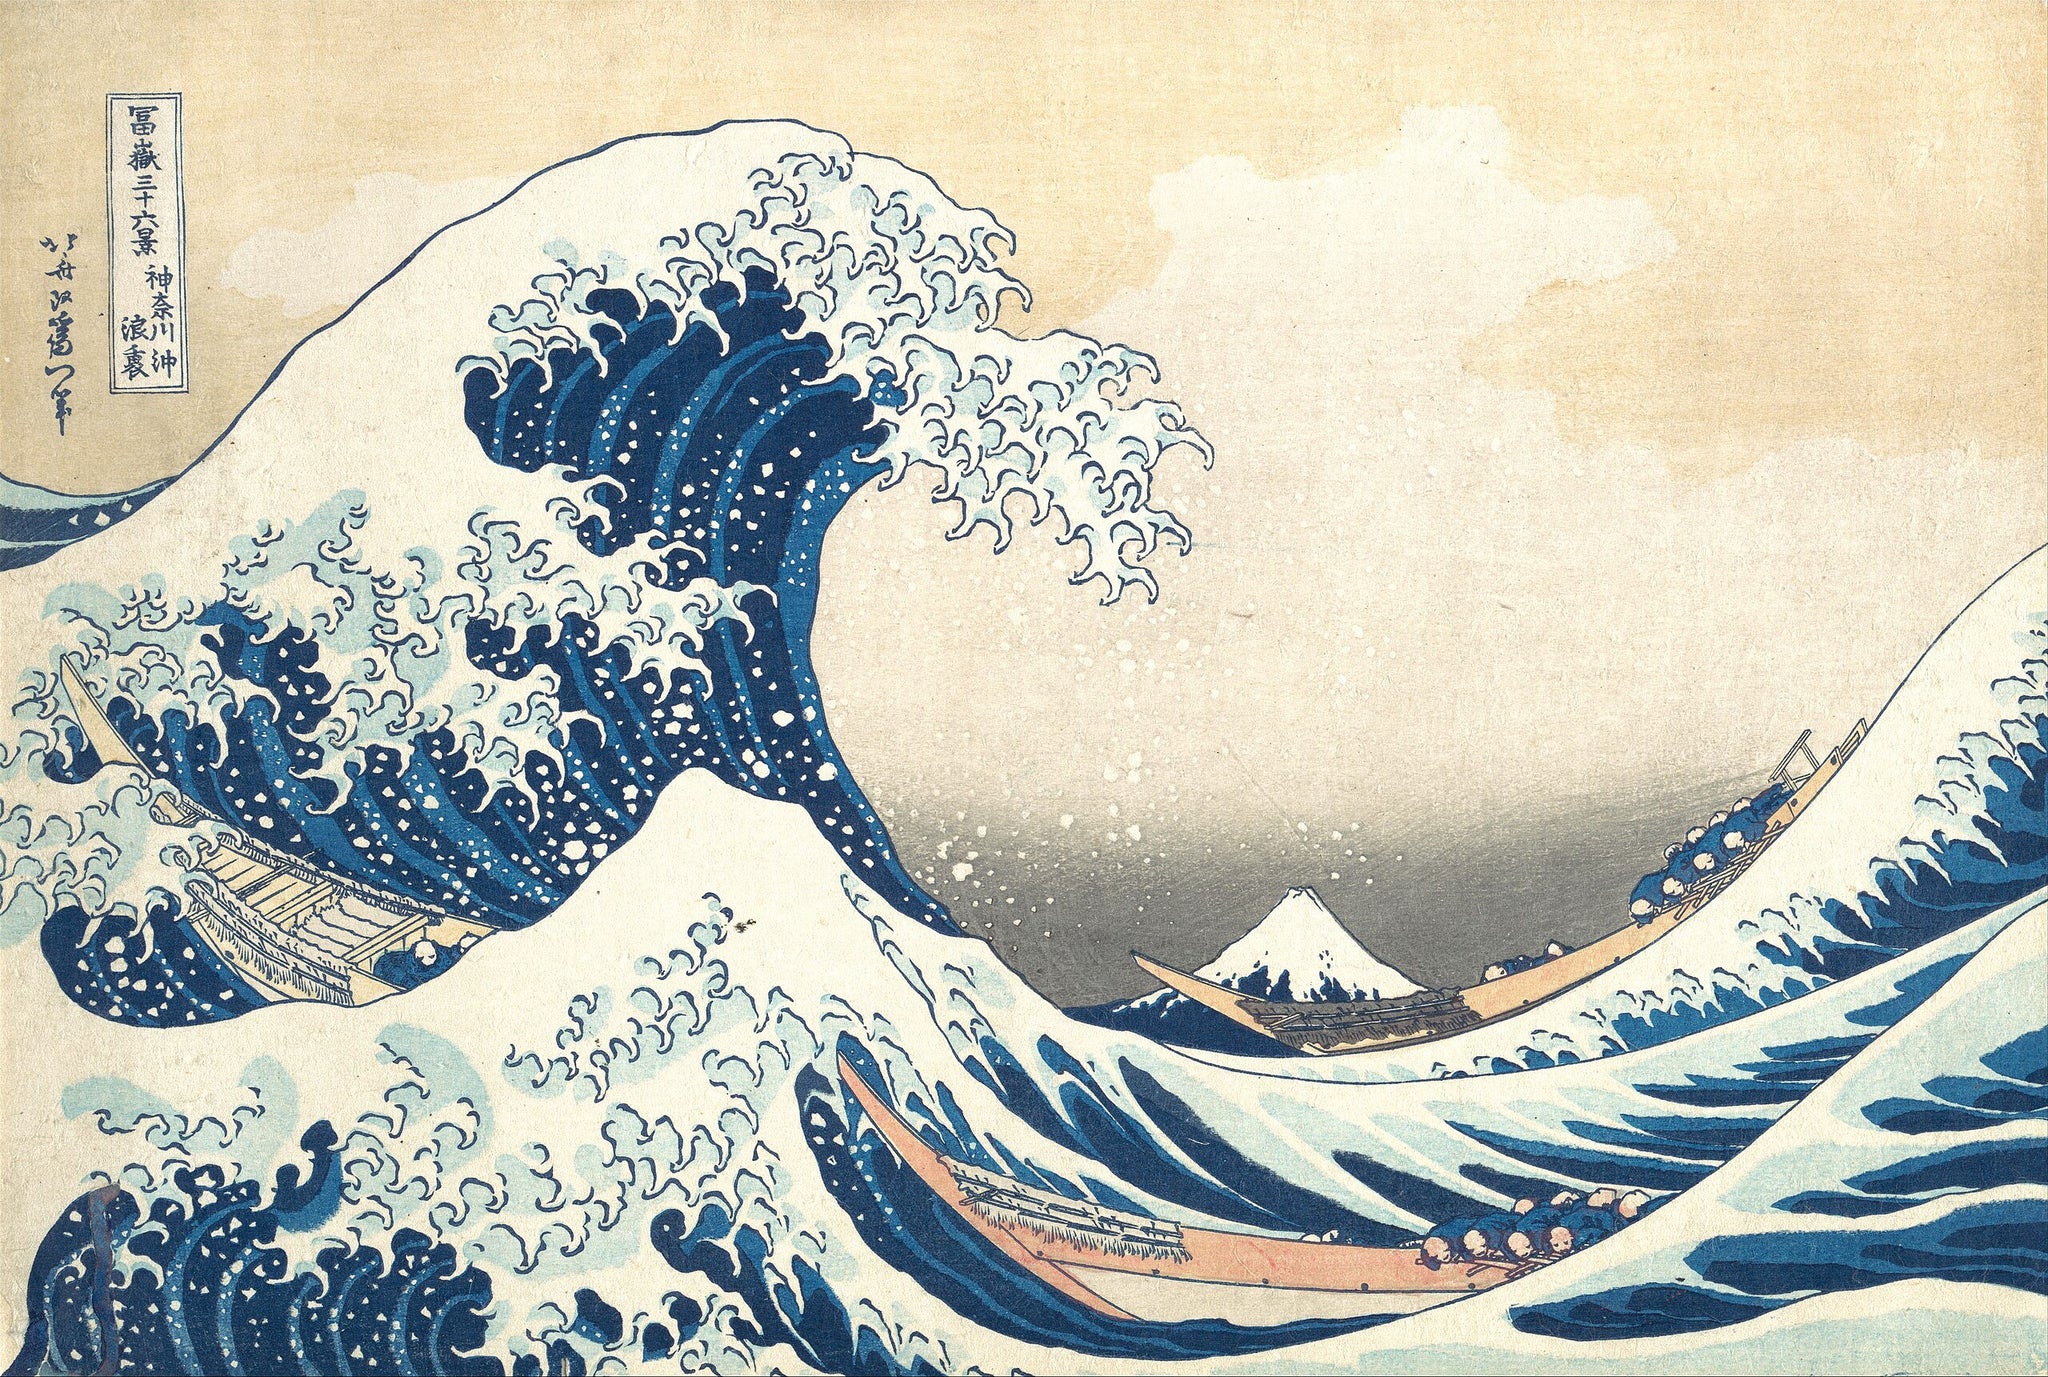 Un filo d'arte: Hokusai